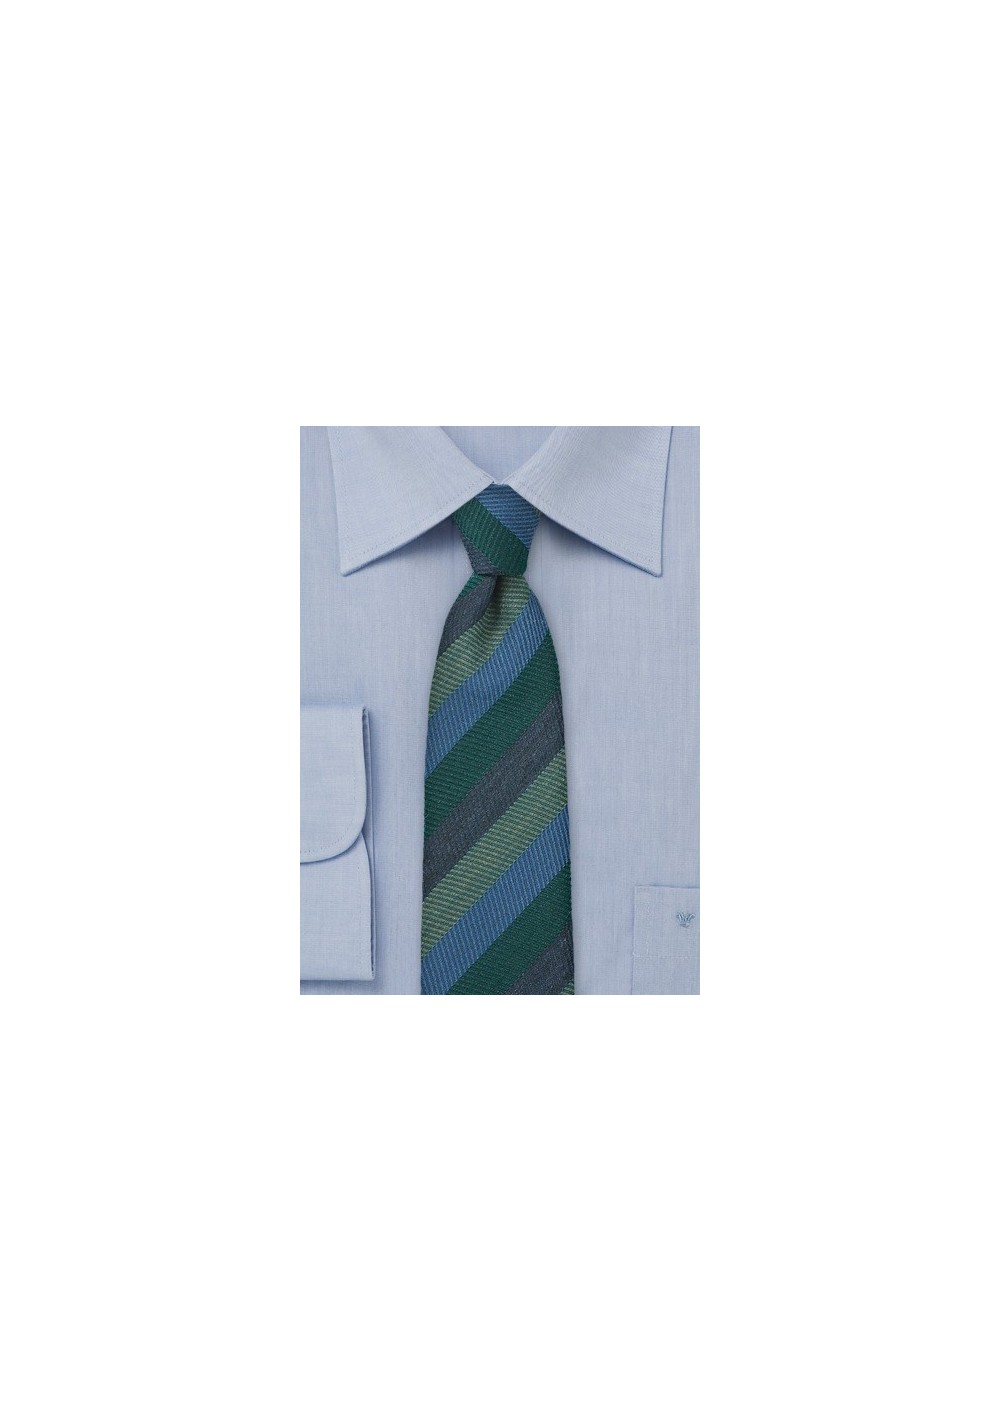 Dark Green and Blue Narrow Wool Tie